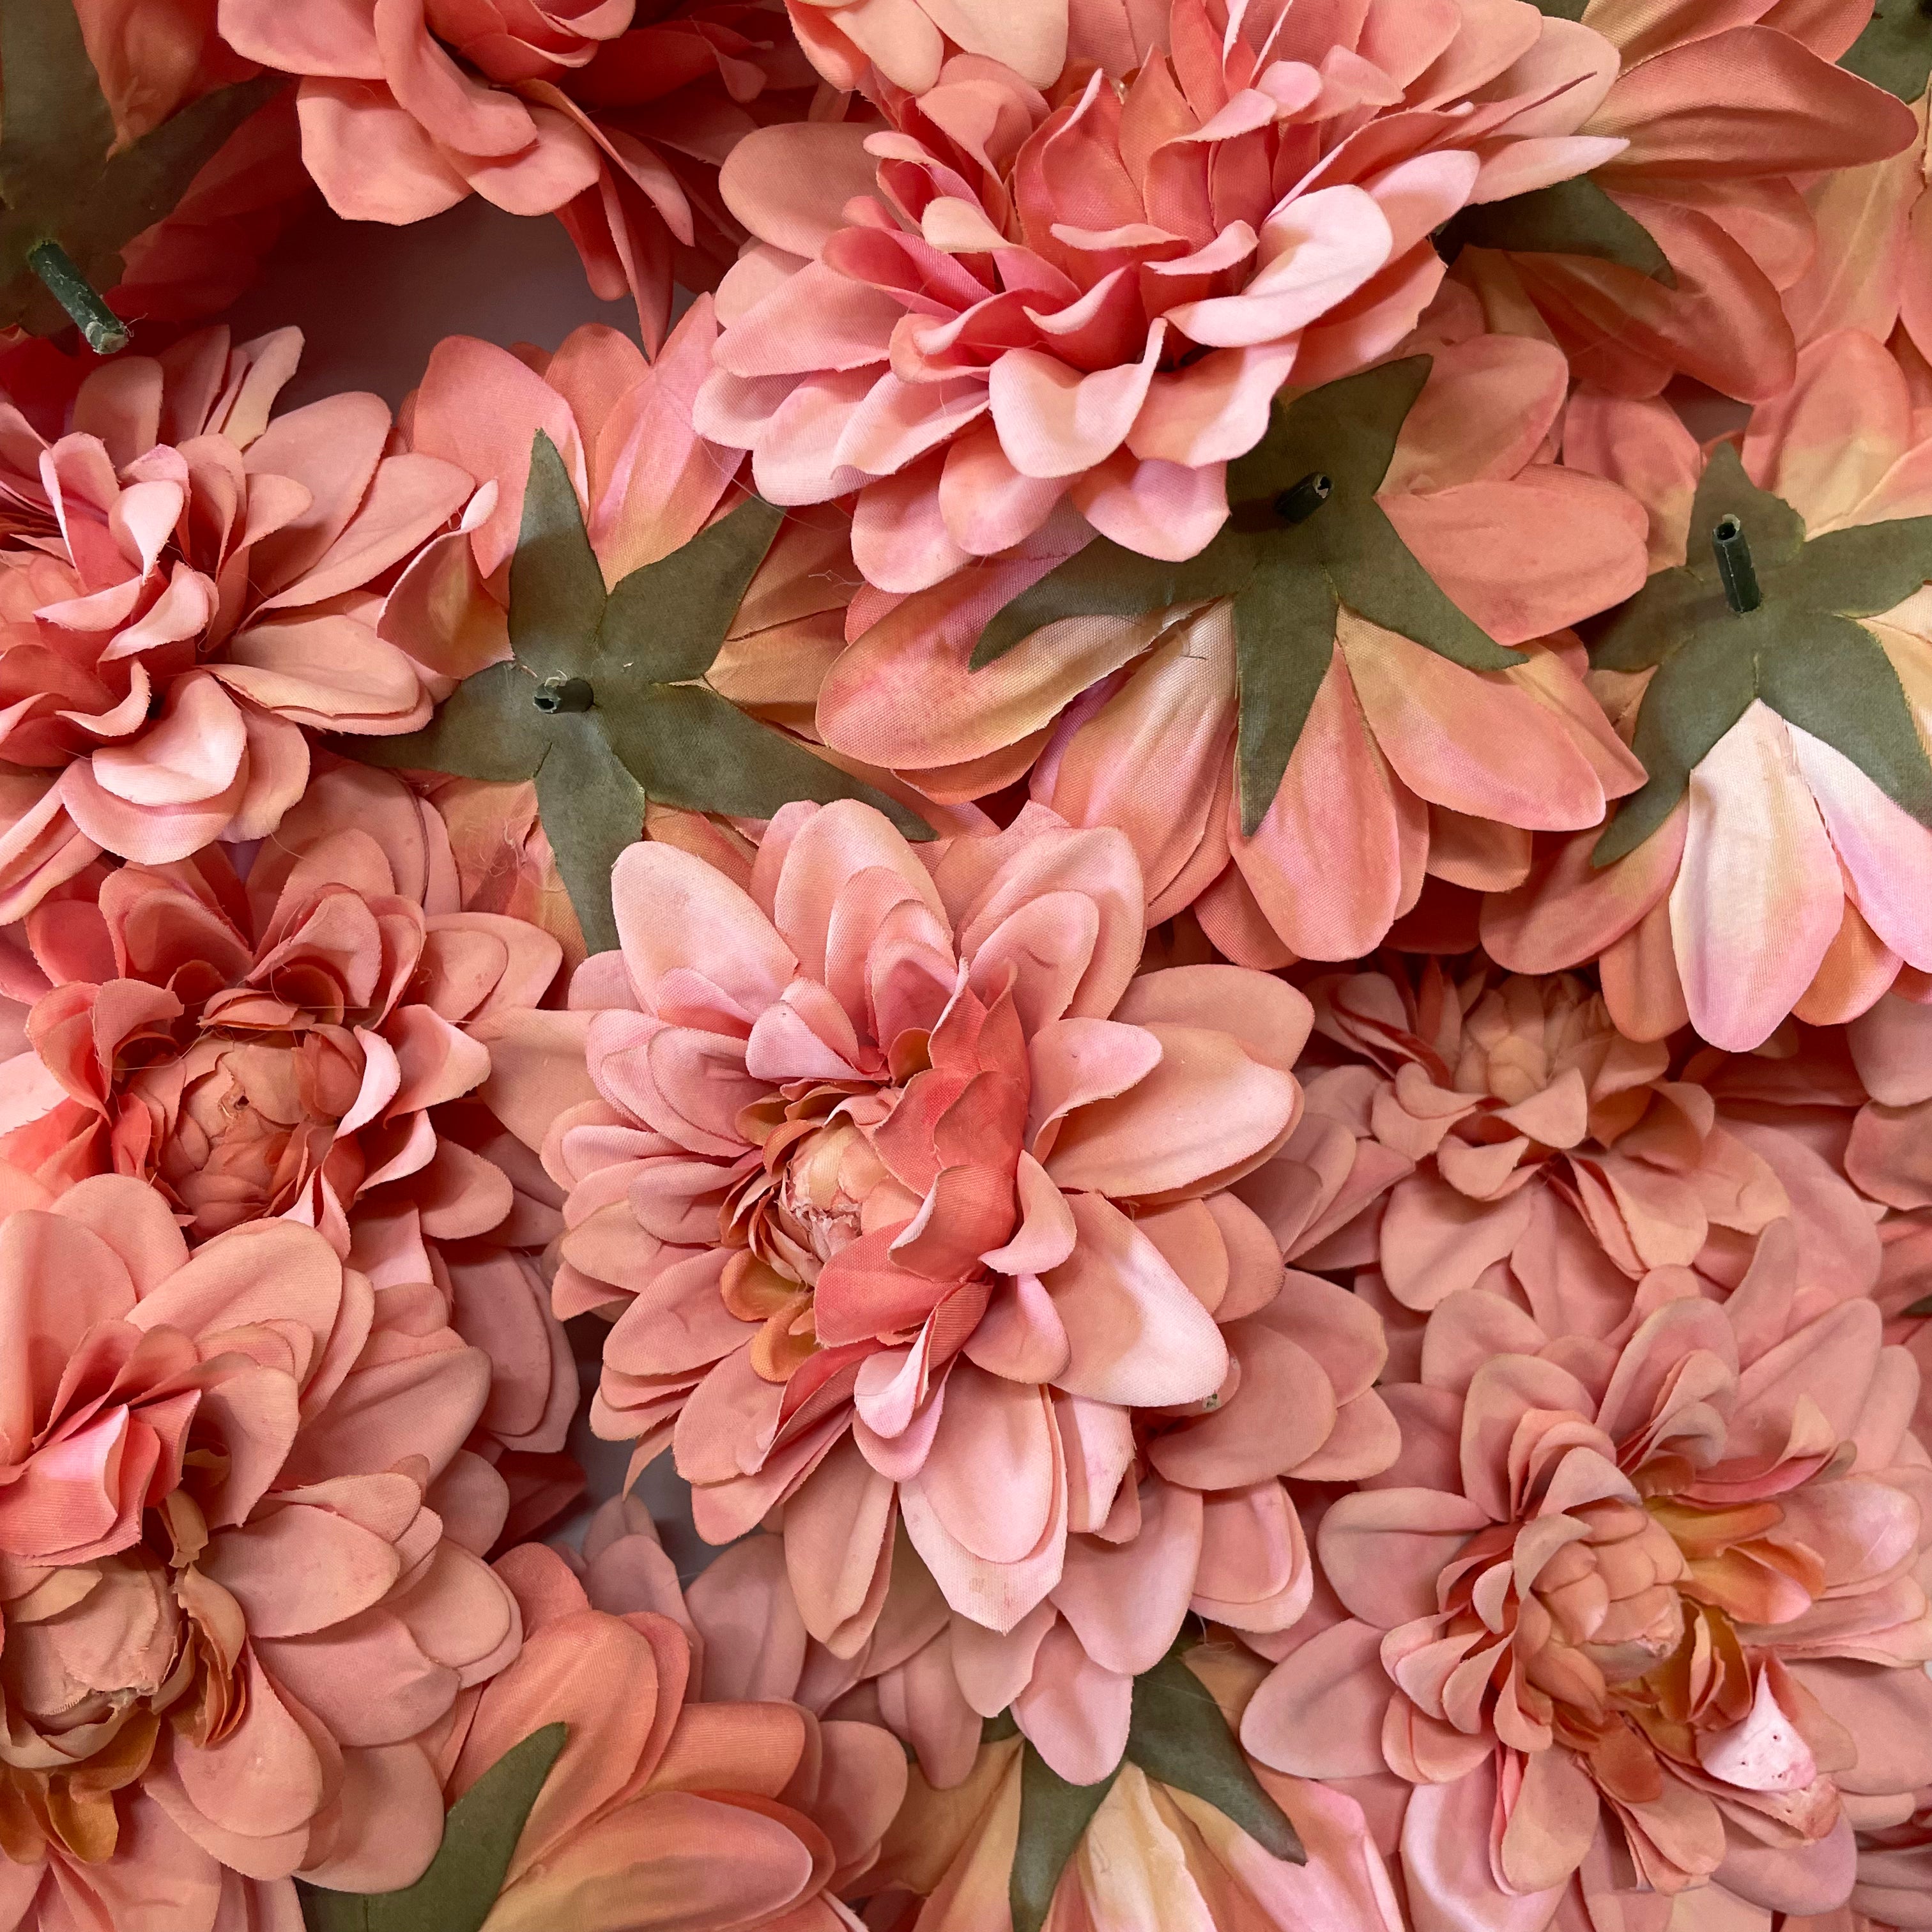 Artificial Silk Flower Heads - Dusty Pink Chrysanthemum Style 26 - 1pc